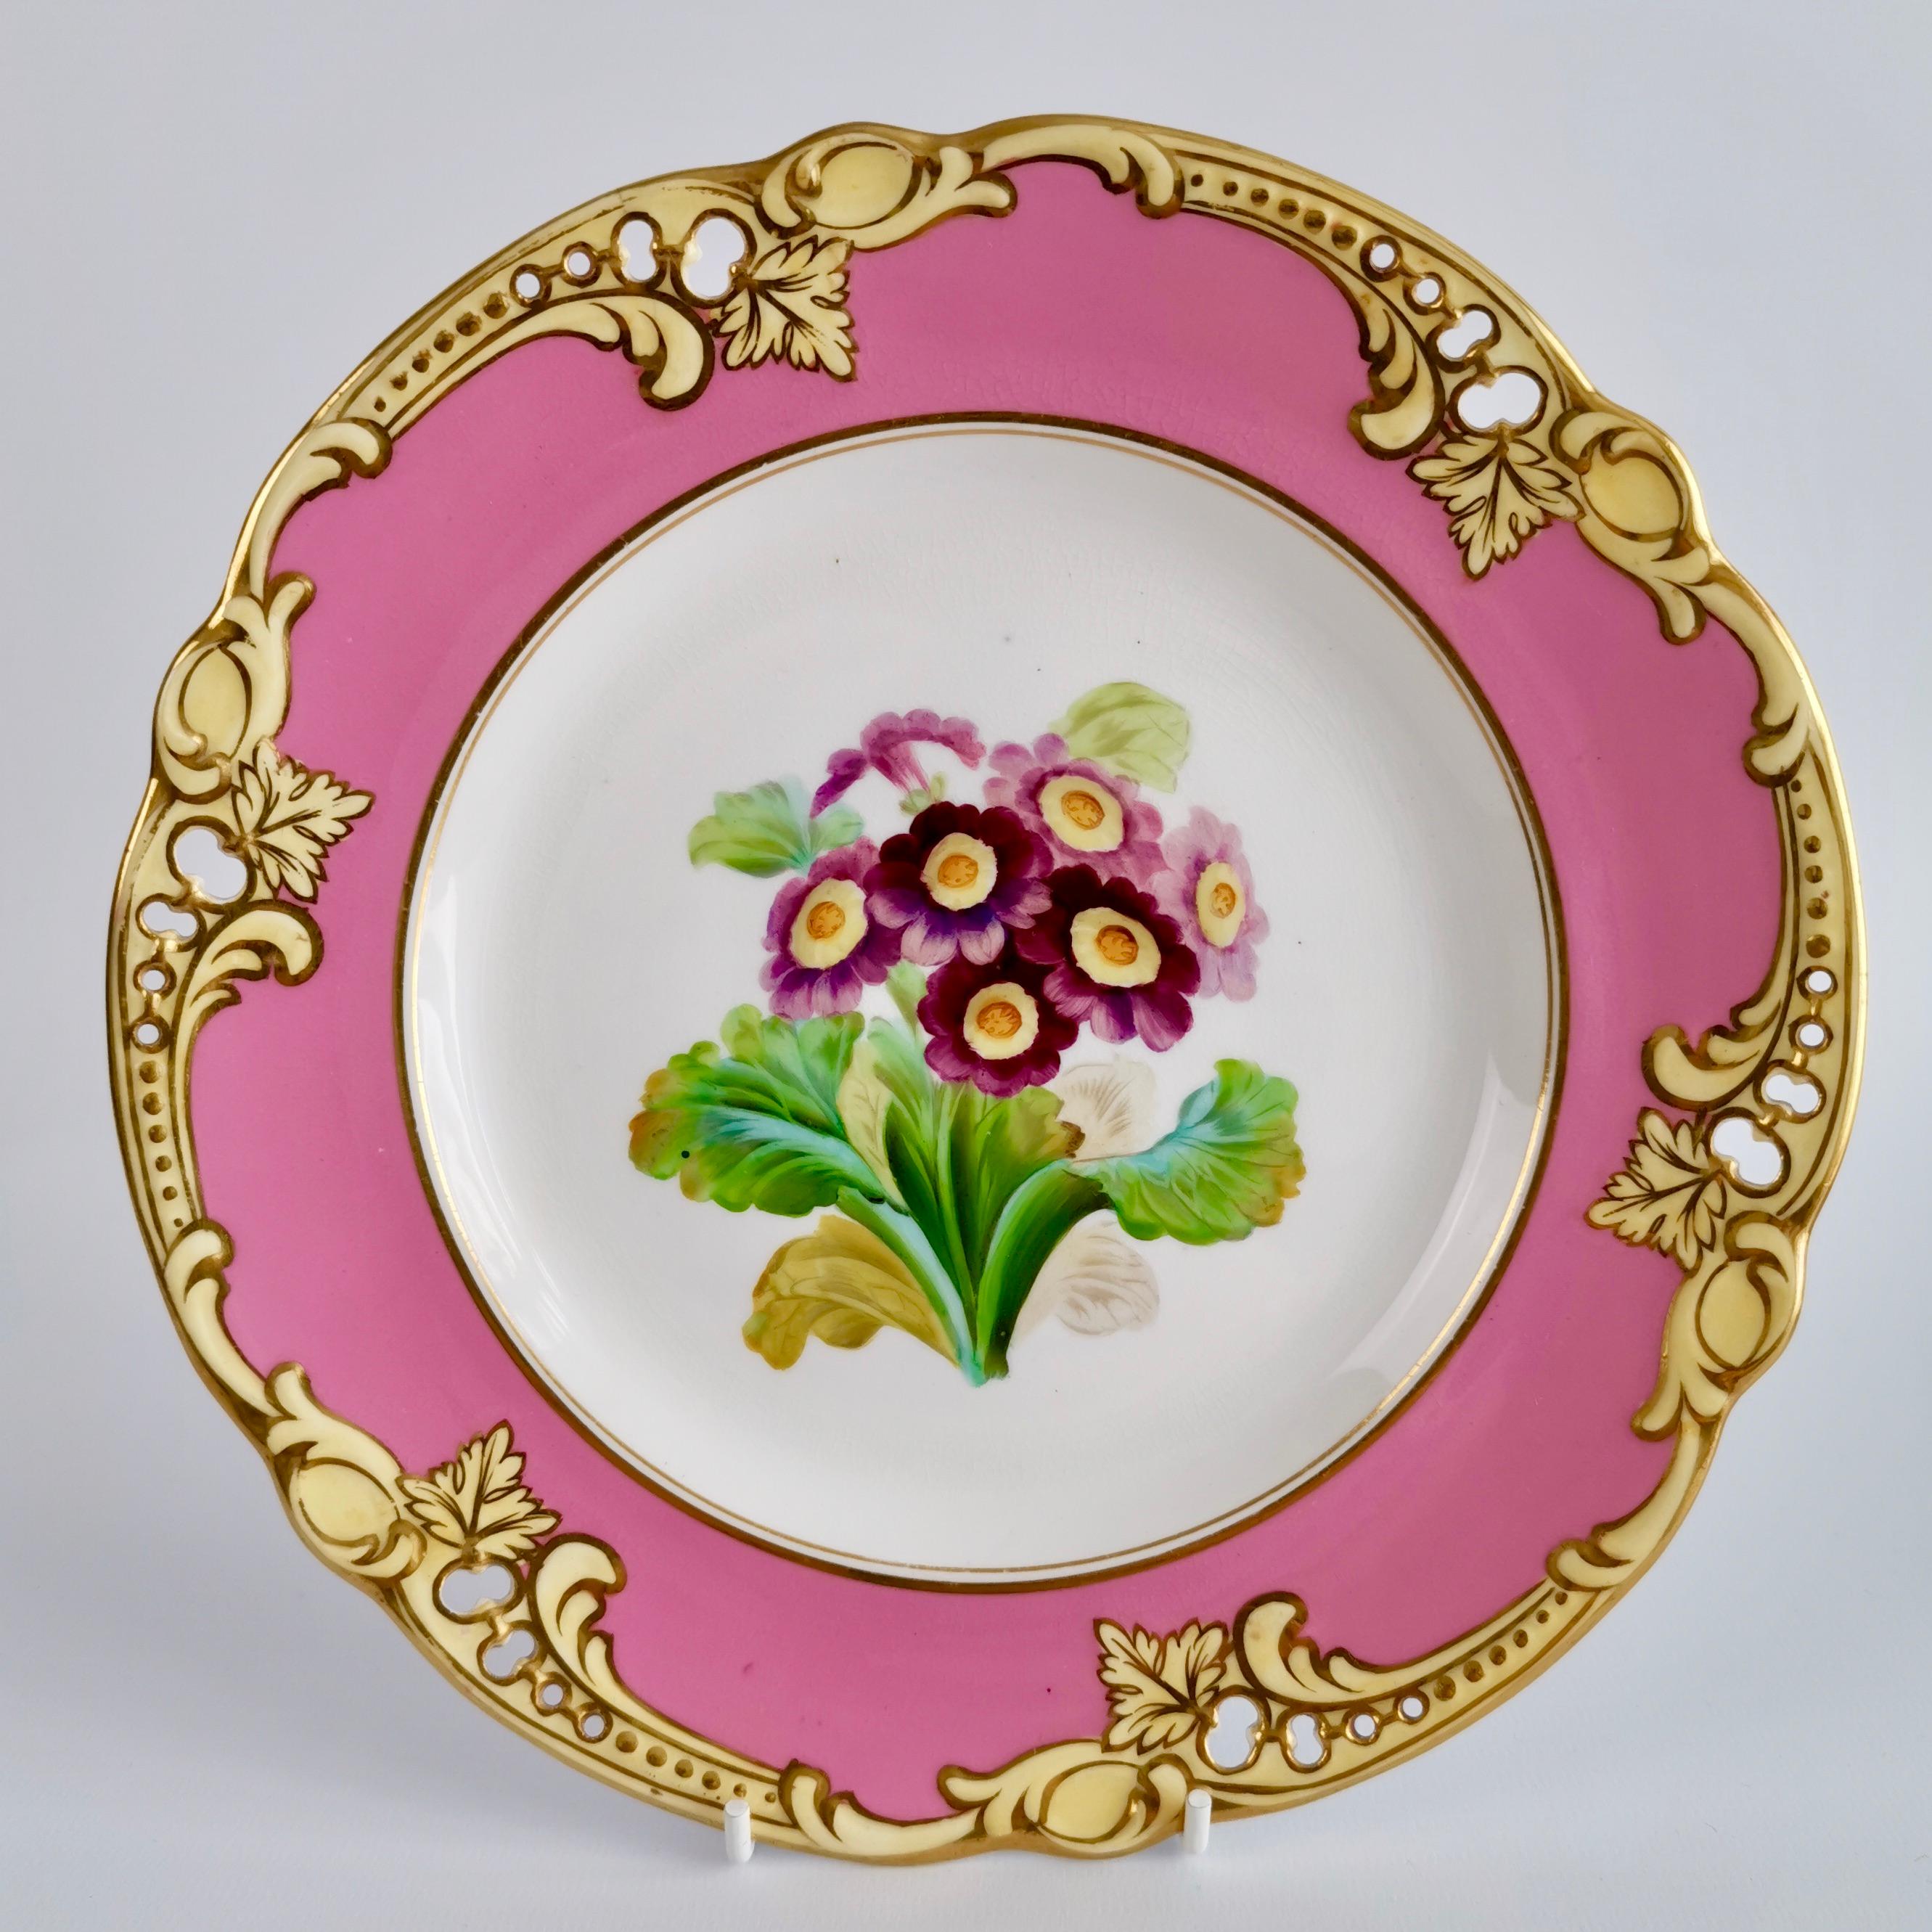 Brown Westhead & Moore Porcelain Dessert Service, Hot Pink Botanical, circa 1860 1